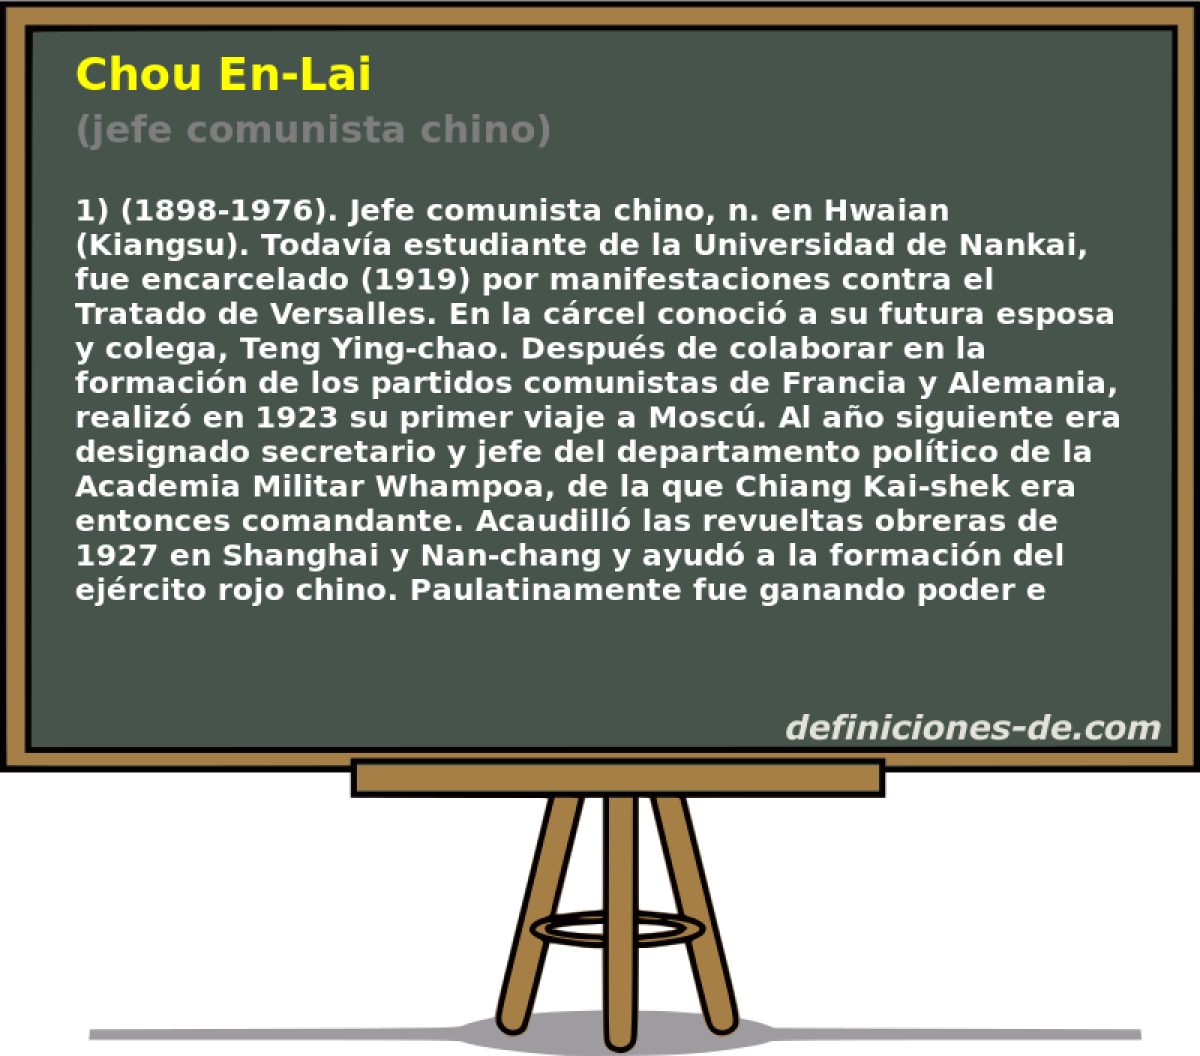 Chou En-Lai (jefe comunista chino)